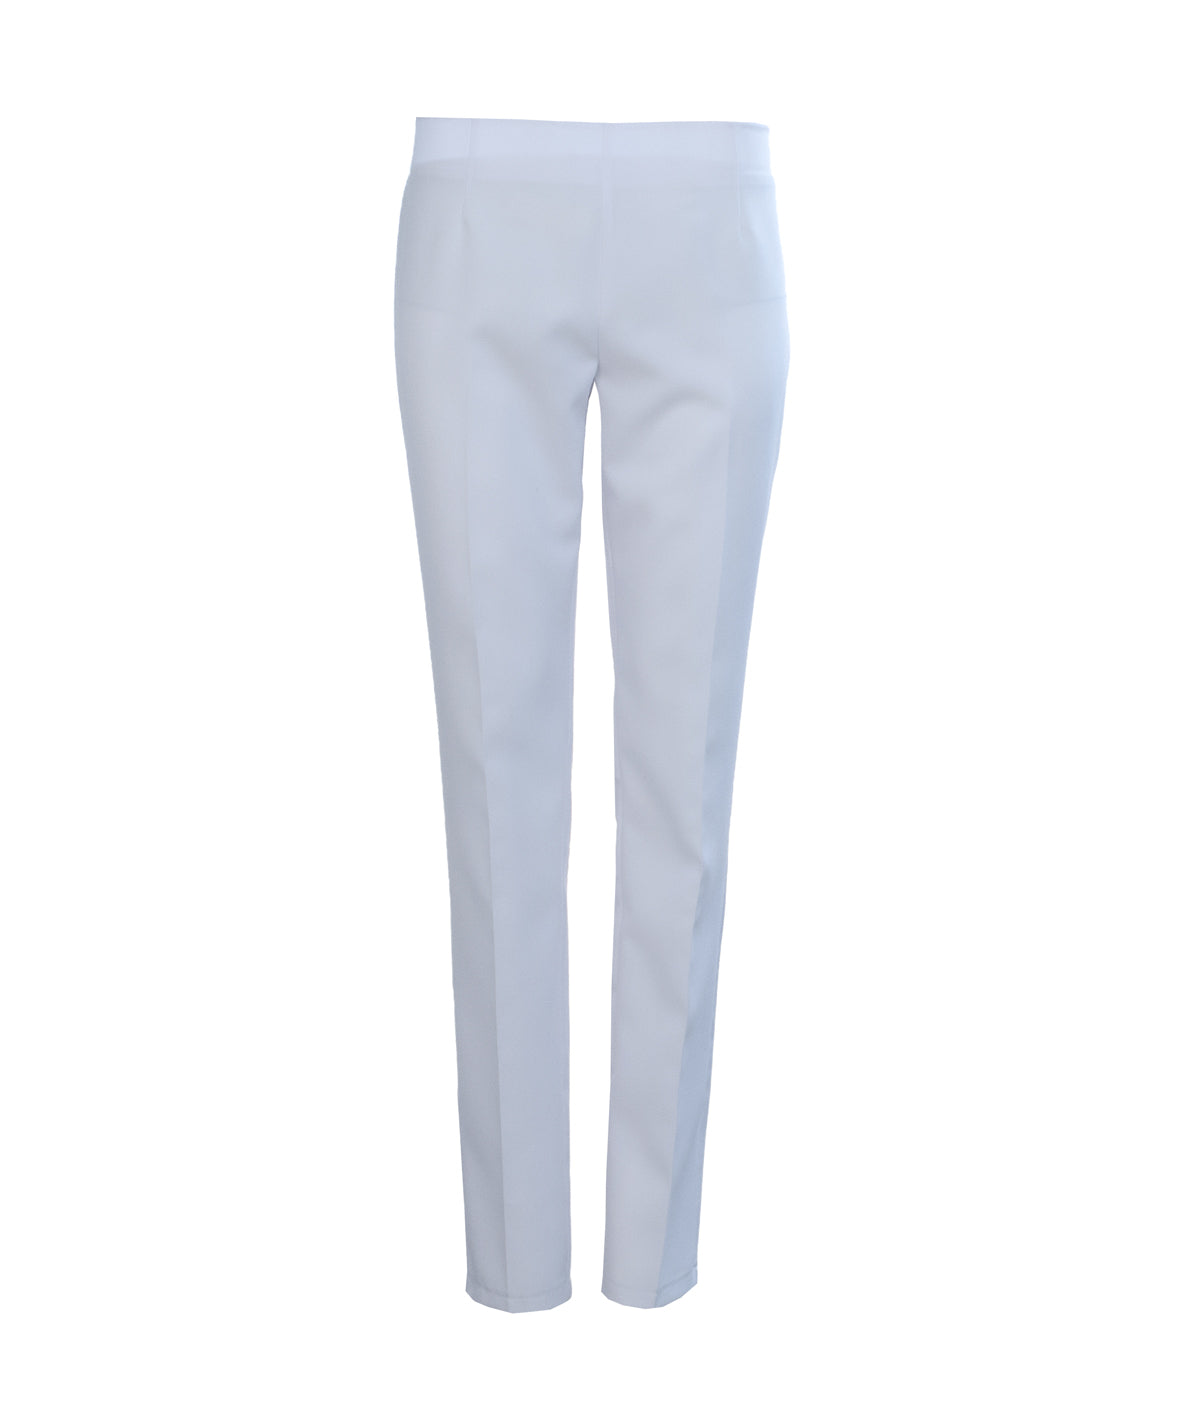 Pantalon de travail skinny Les Secrets du Style #750 blanc